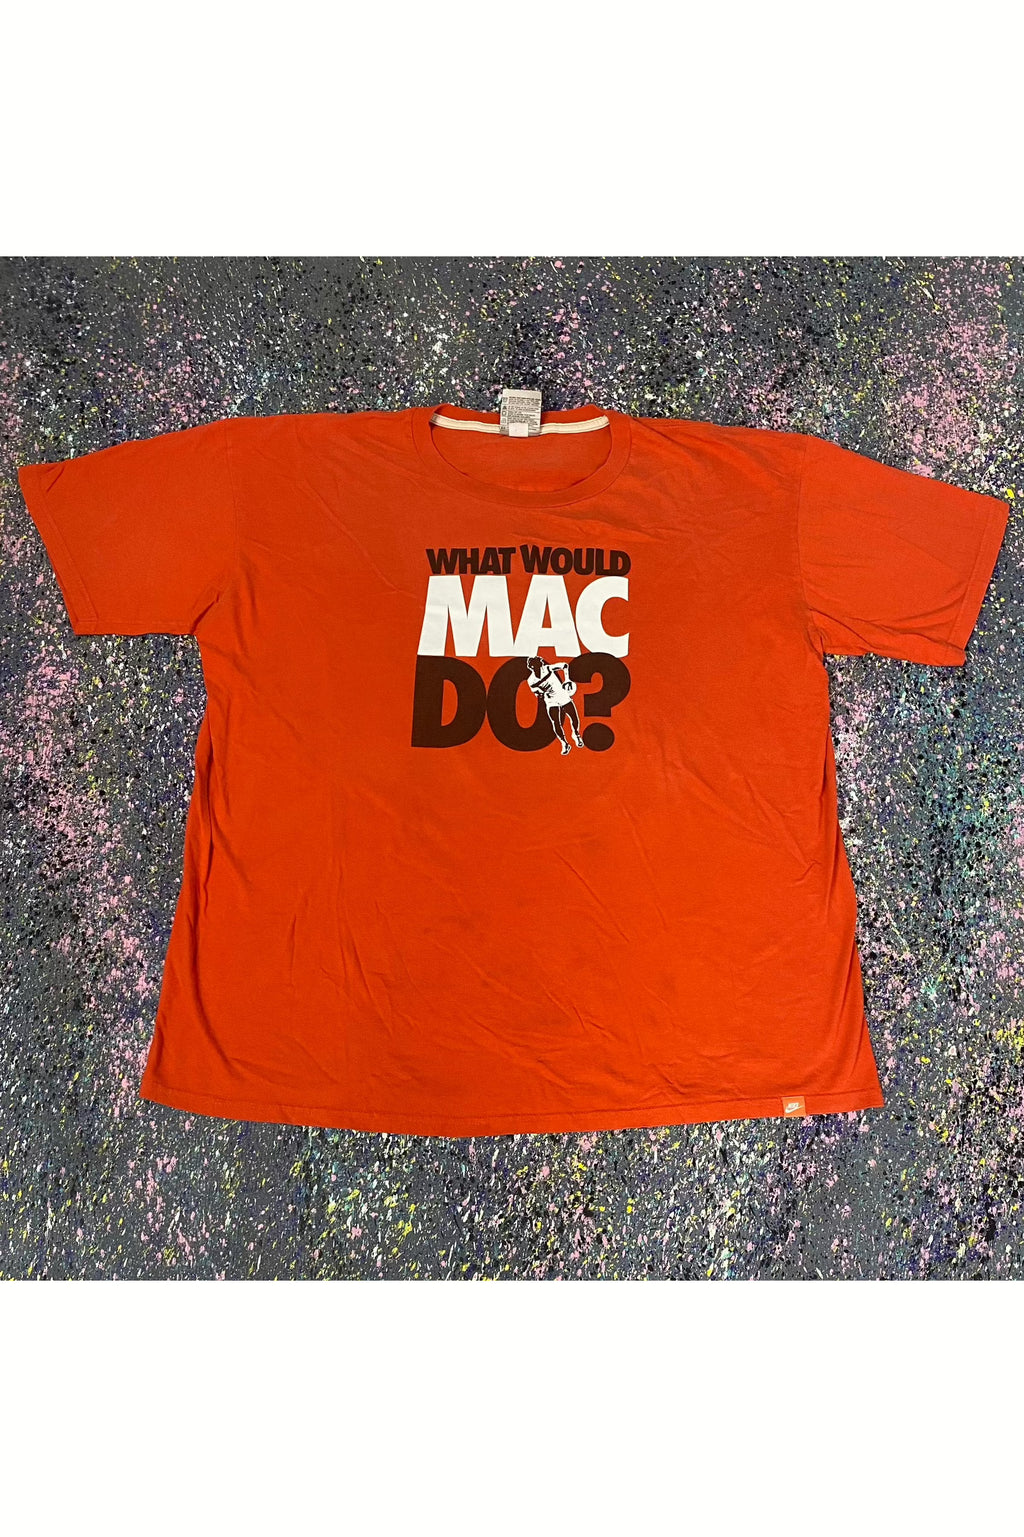 2000s Nike What Would Mac Do? Tee- XXL